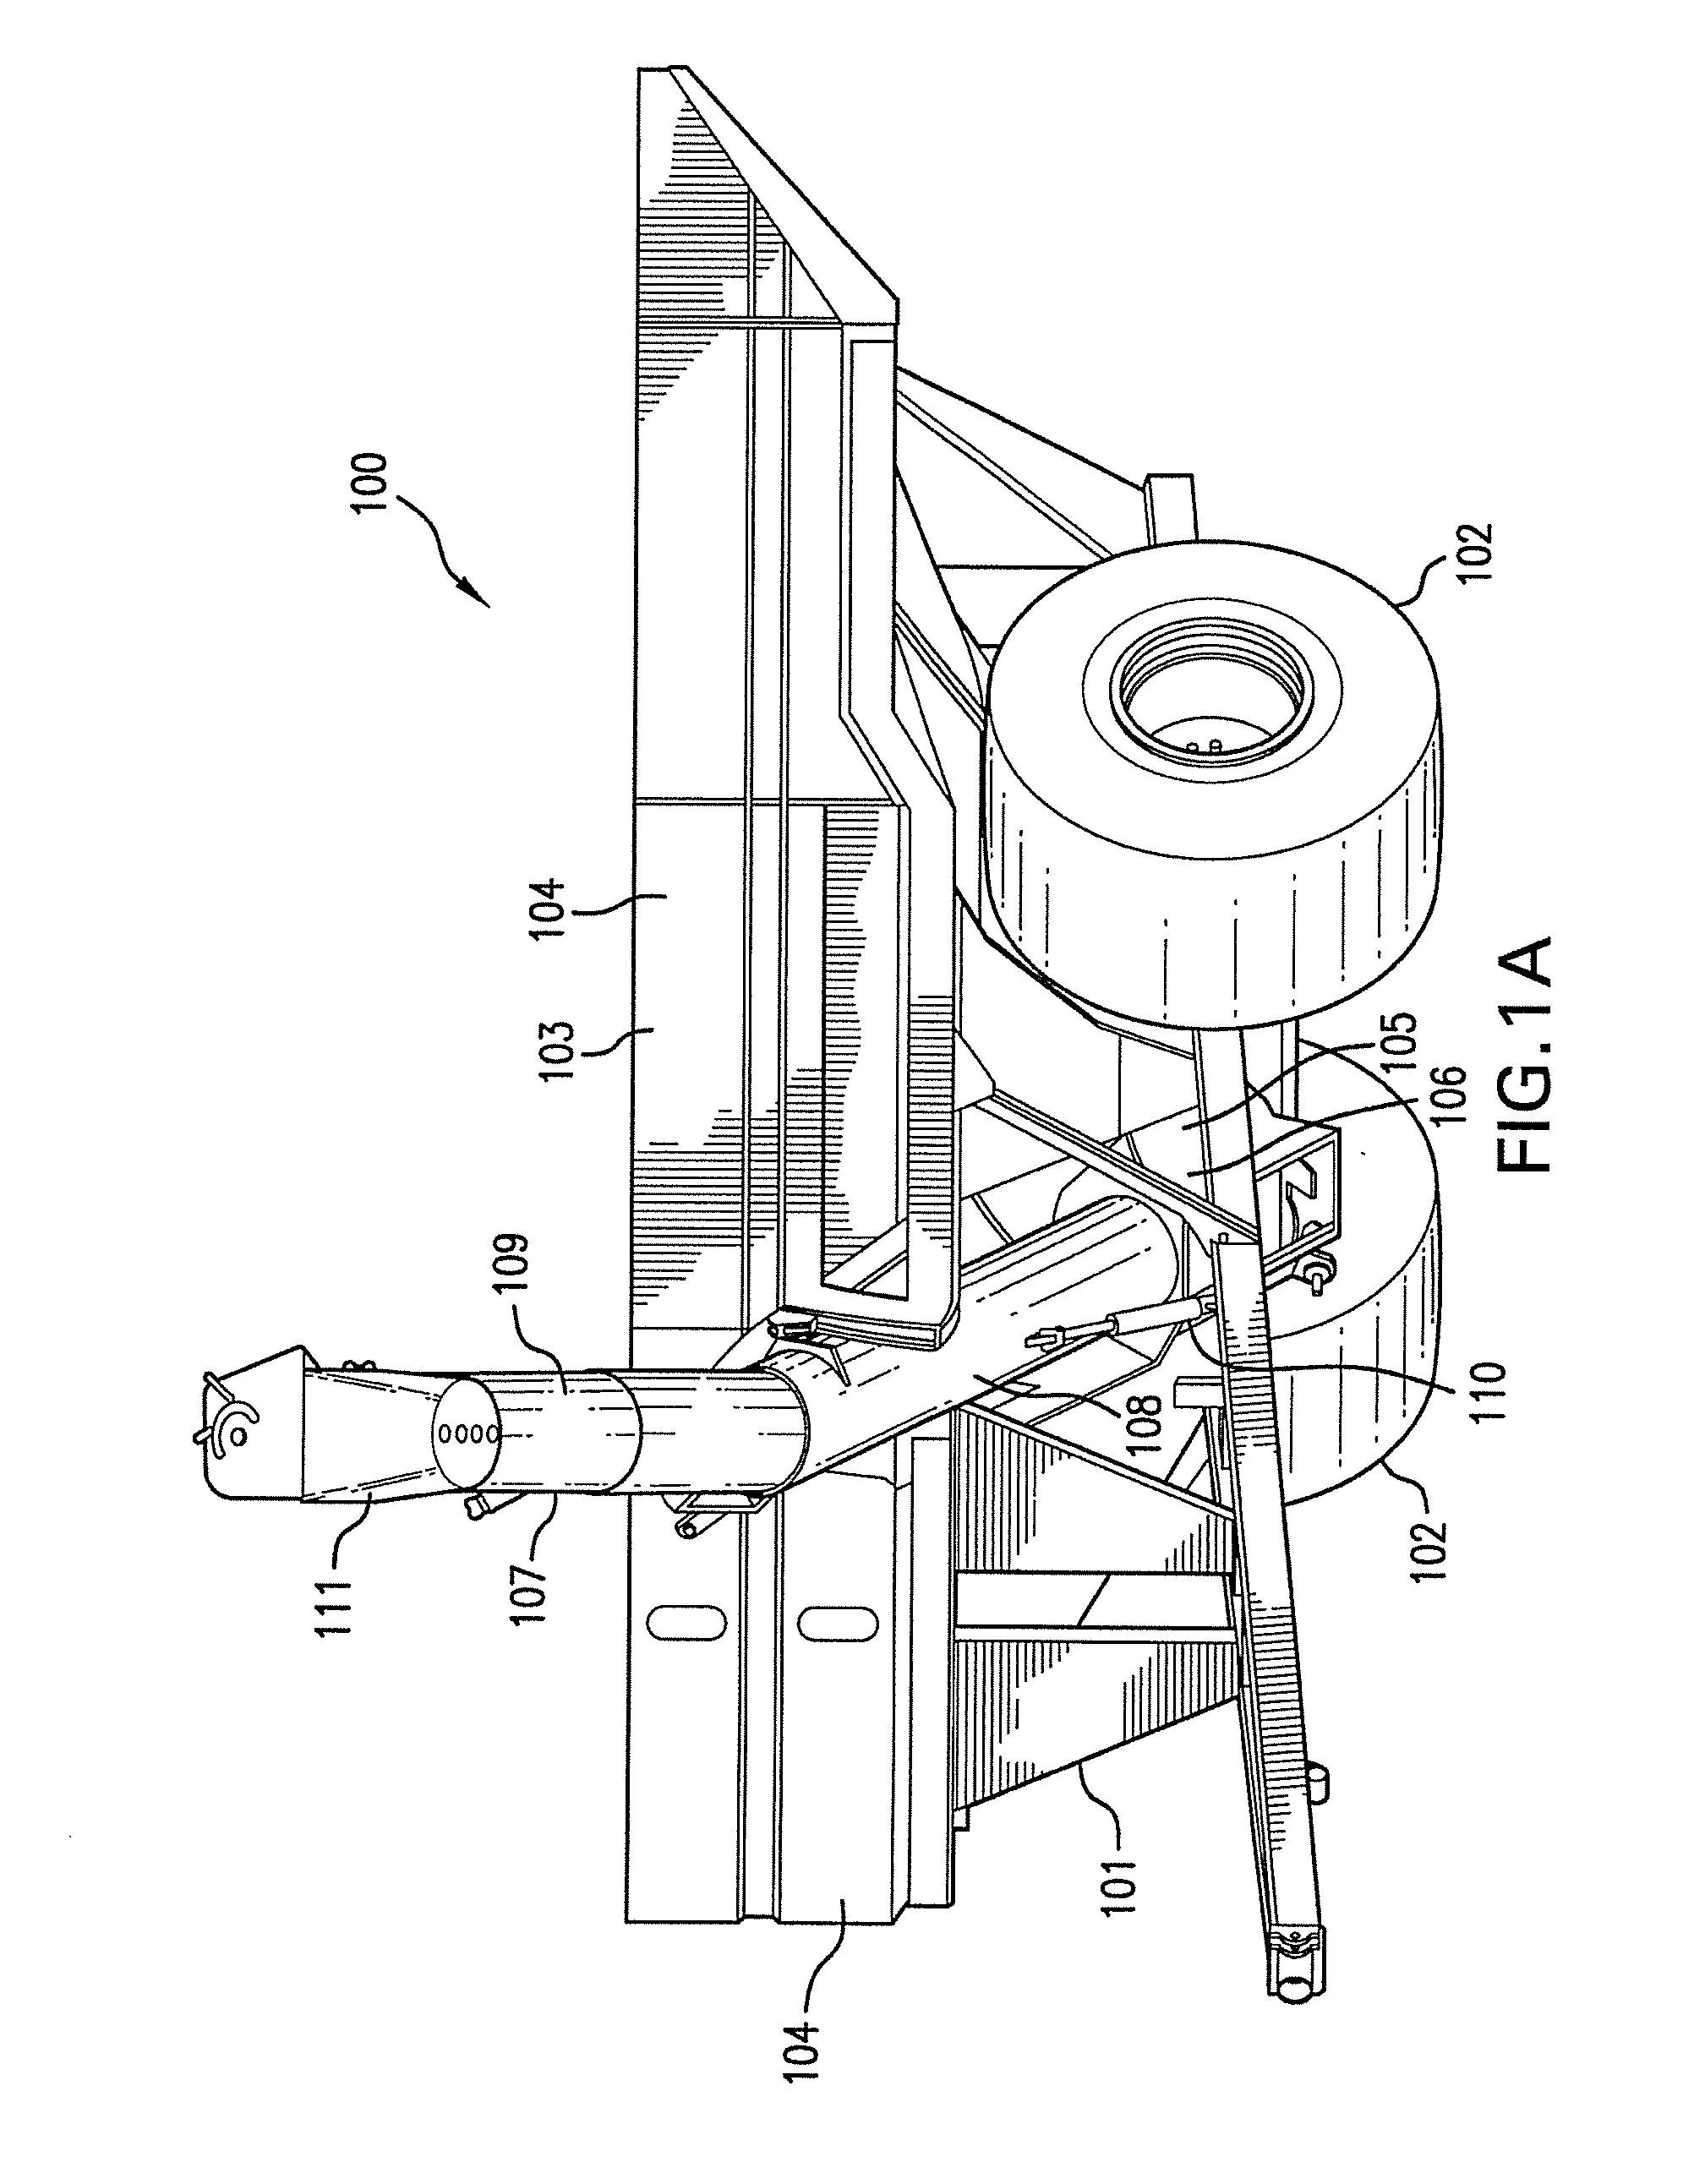 Cart with folding auger having adjustable elevation